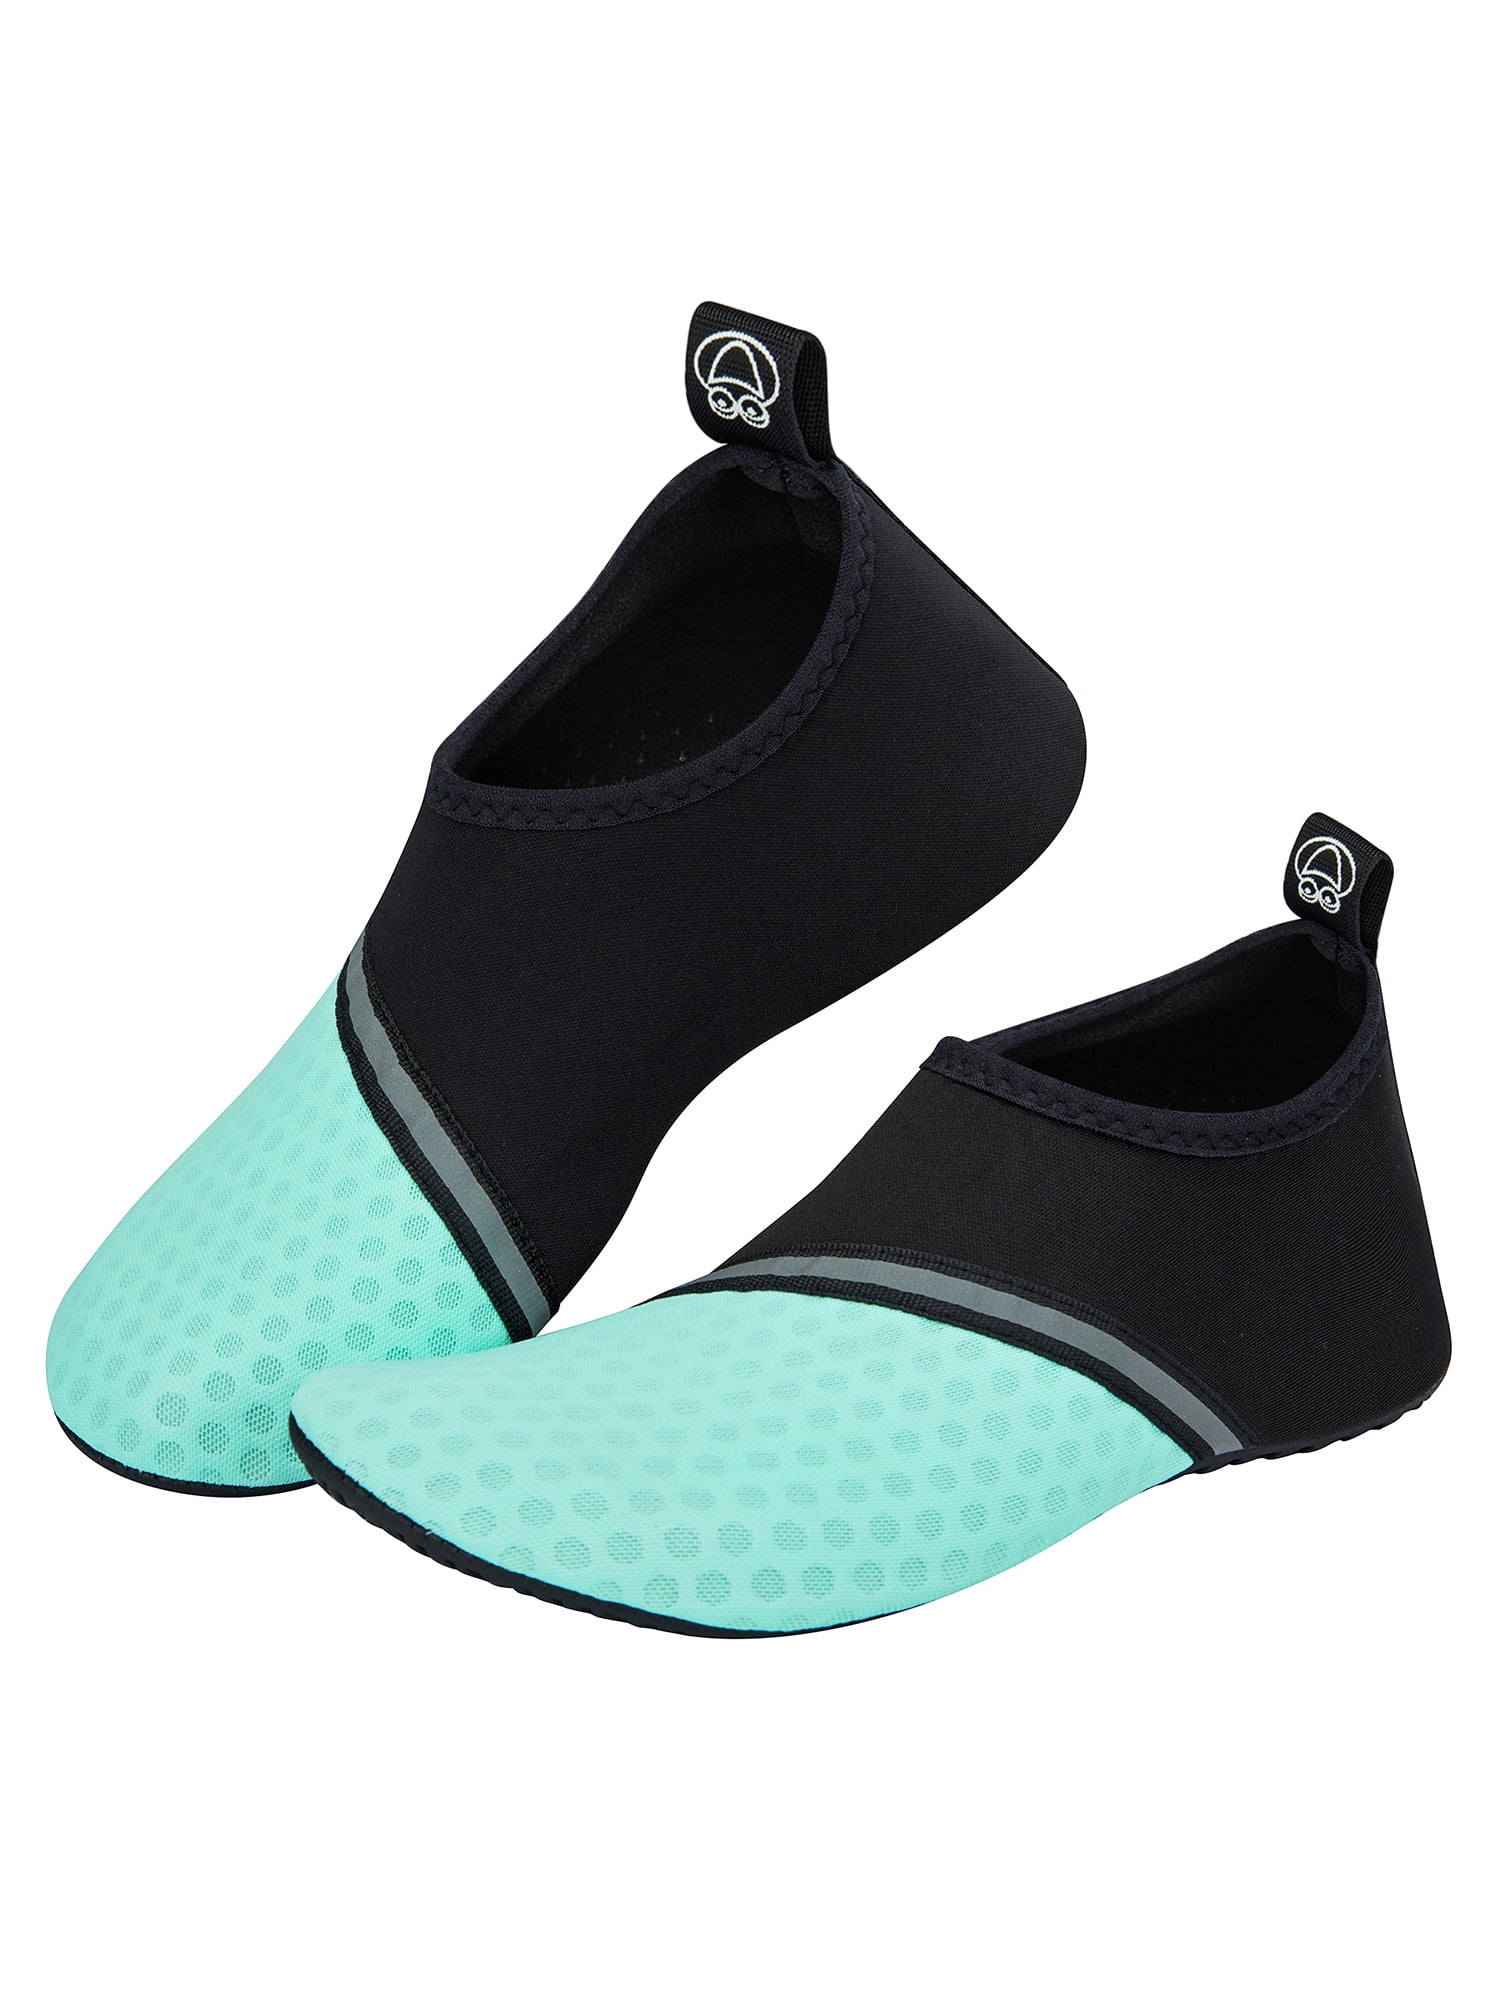 JIASUQI Kids Boys and Girls Summer Athletic Water Shoes Aqua Socks for Beach Swimming Pool 